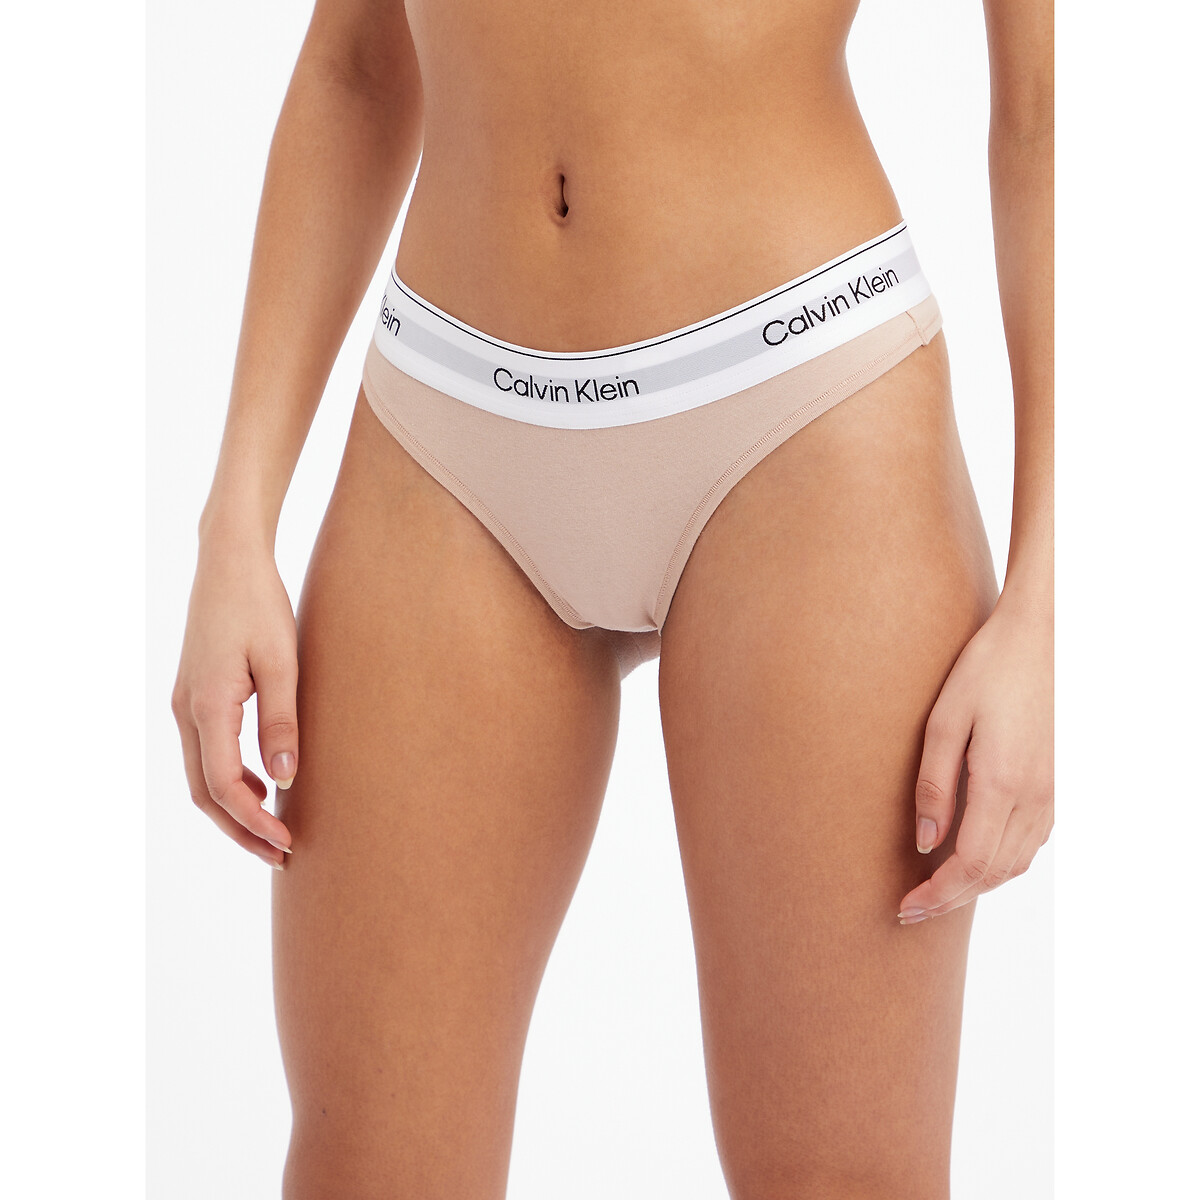 stuk kreupel Soeverein String modern katoen ceder Calvin Klein Underwear | La Redoute